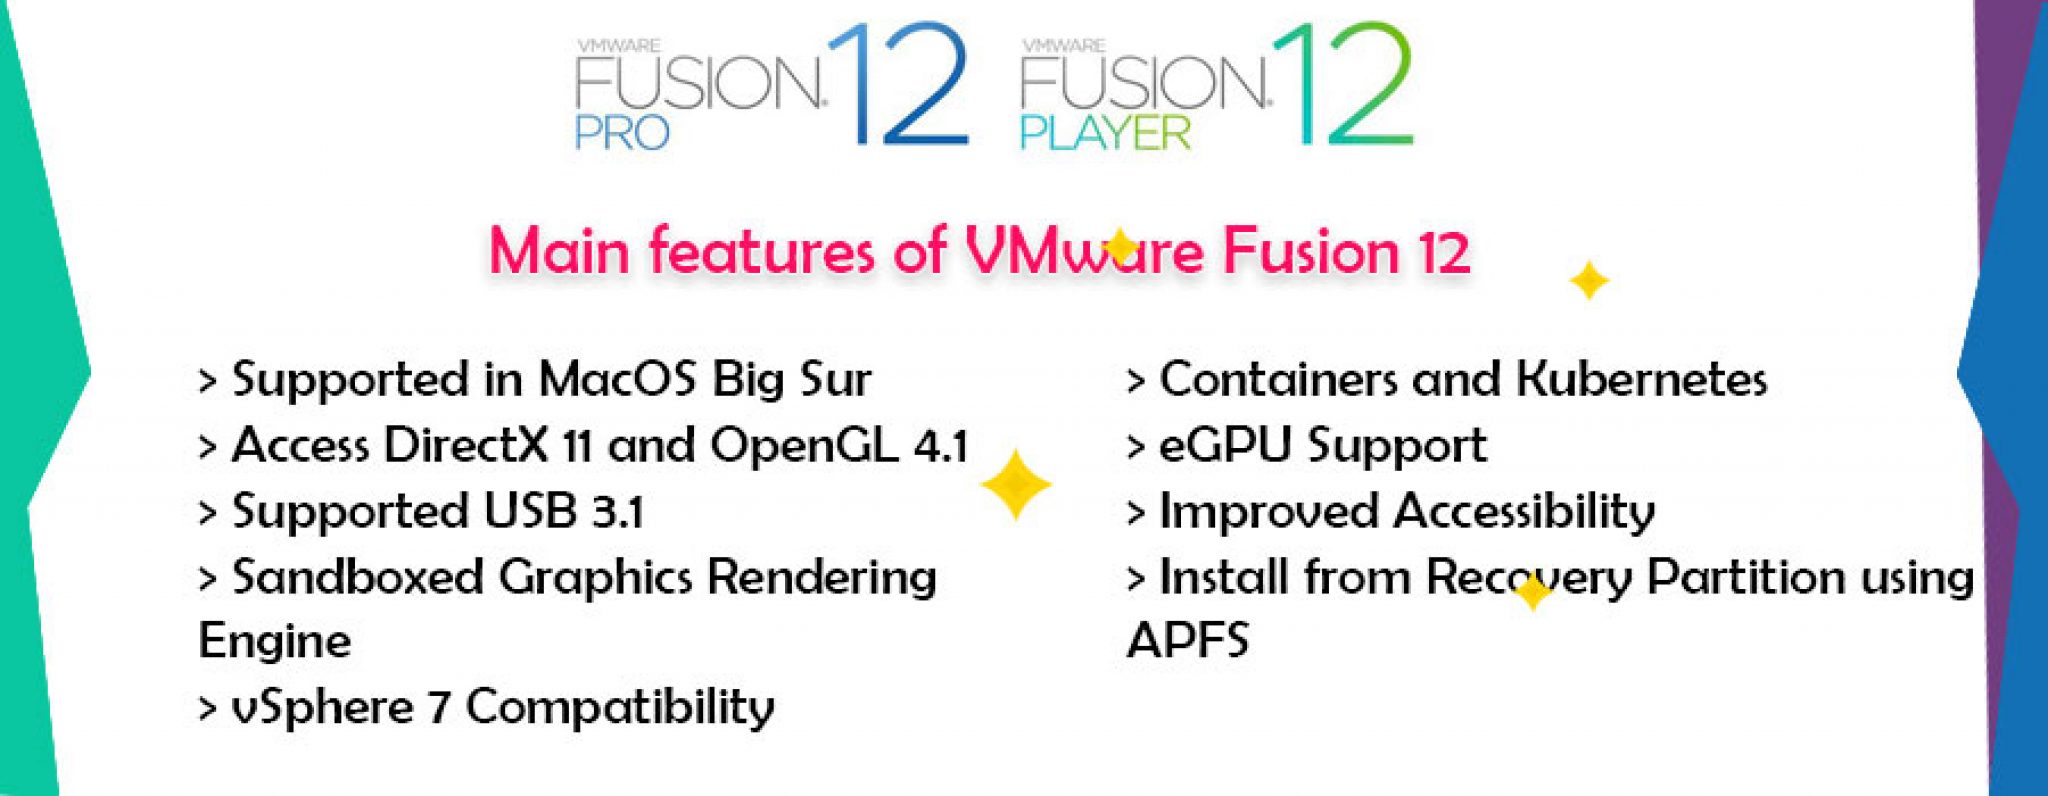 vmware fusion 12 player download